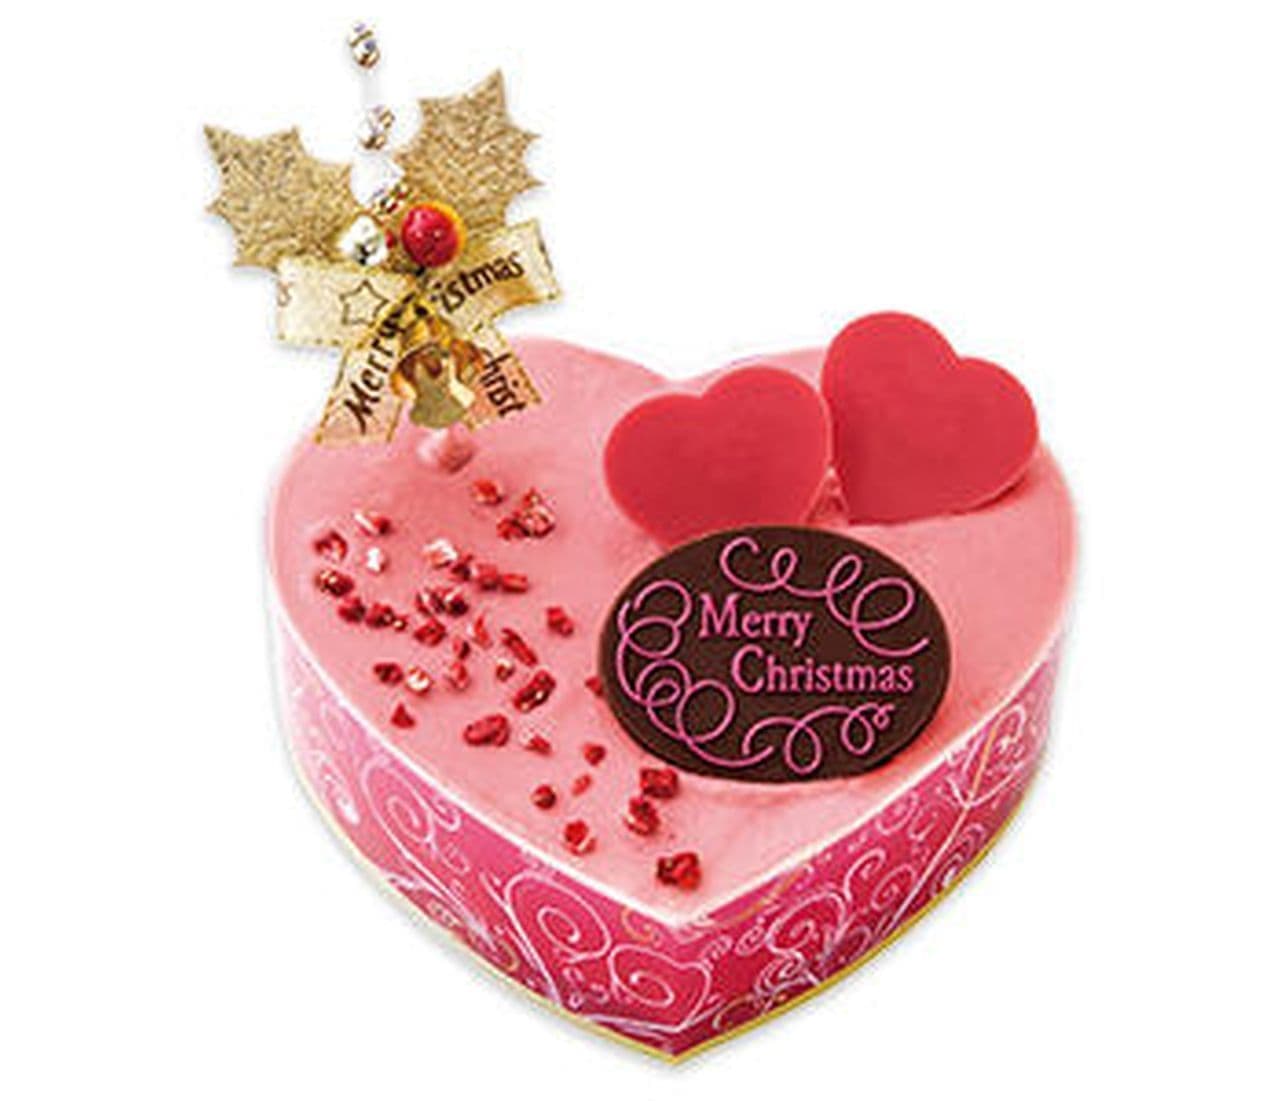 Fujiya "Christmas Ruby Cacao Cream Cake"